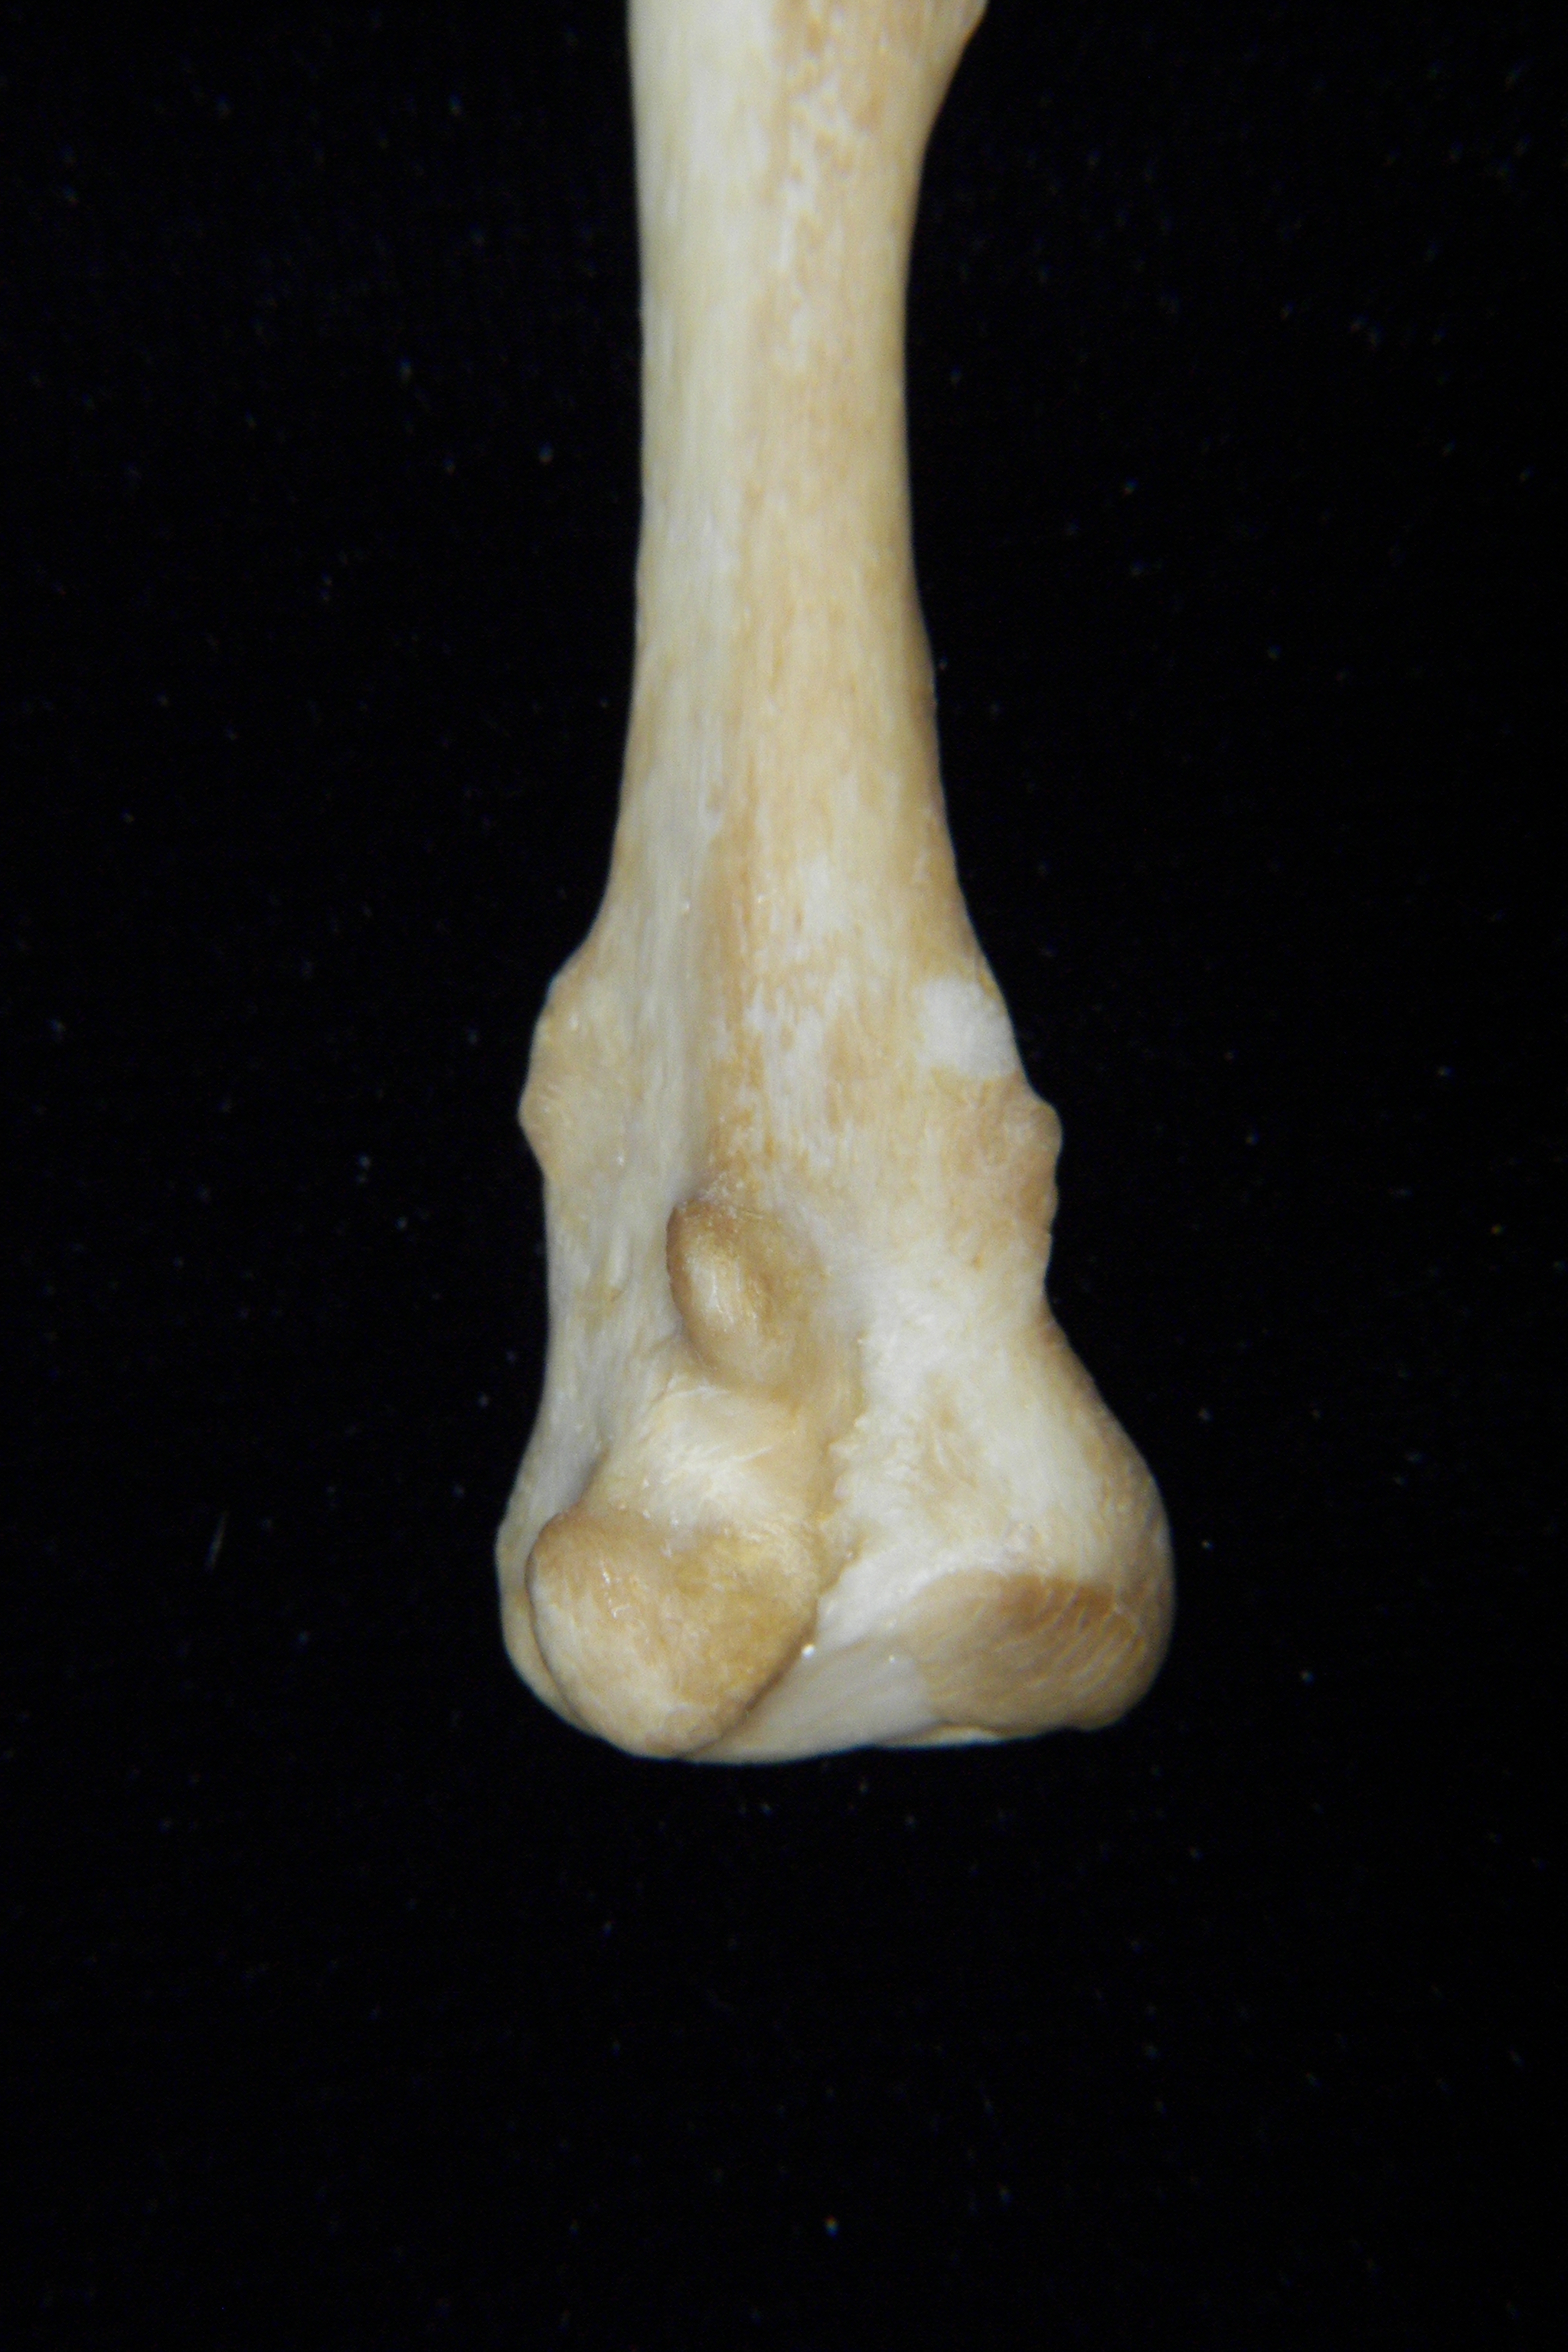 Dog (Canis lupus familiaris) left fibula, distal aspect